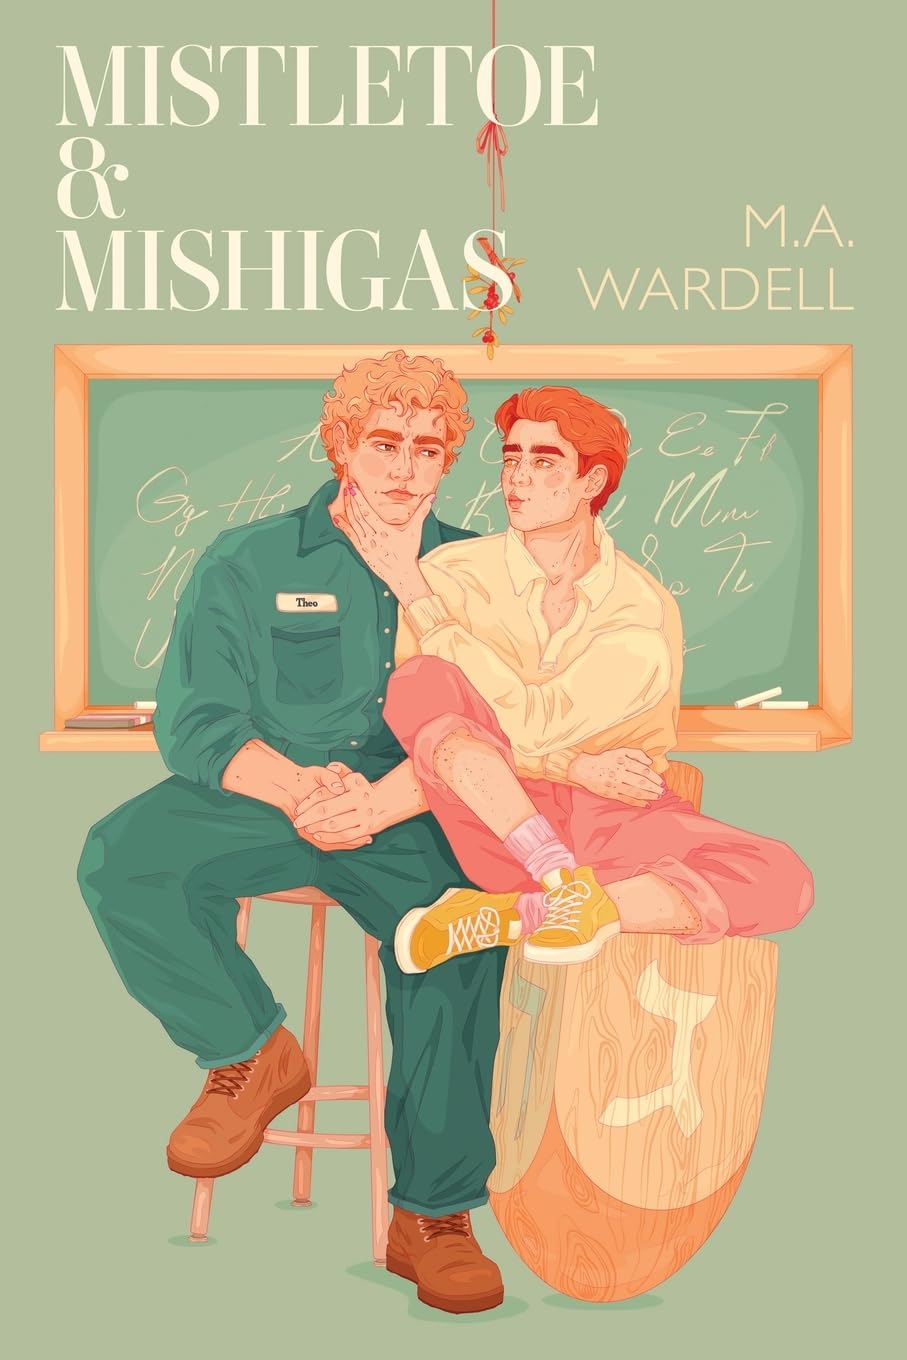 Mistletoe & Mishigas - M.A. Wardell